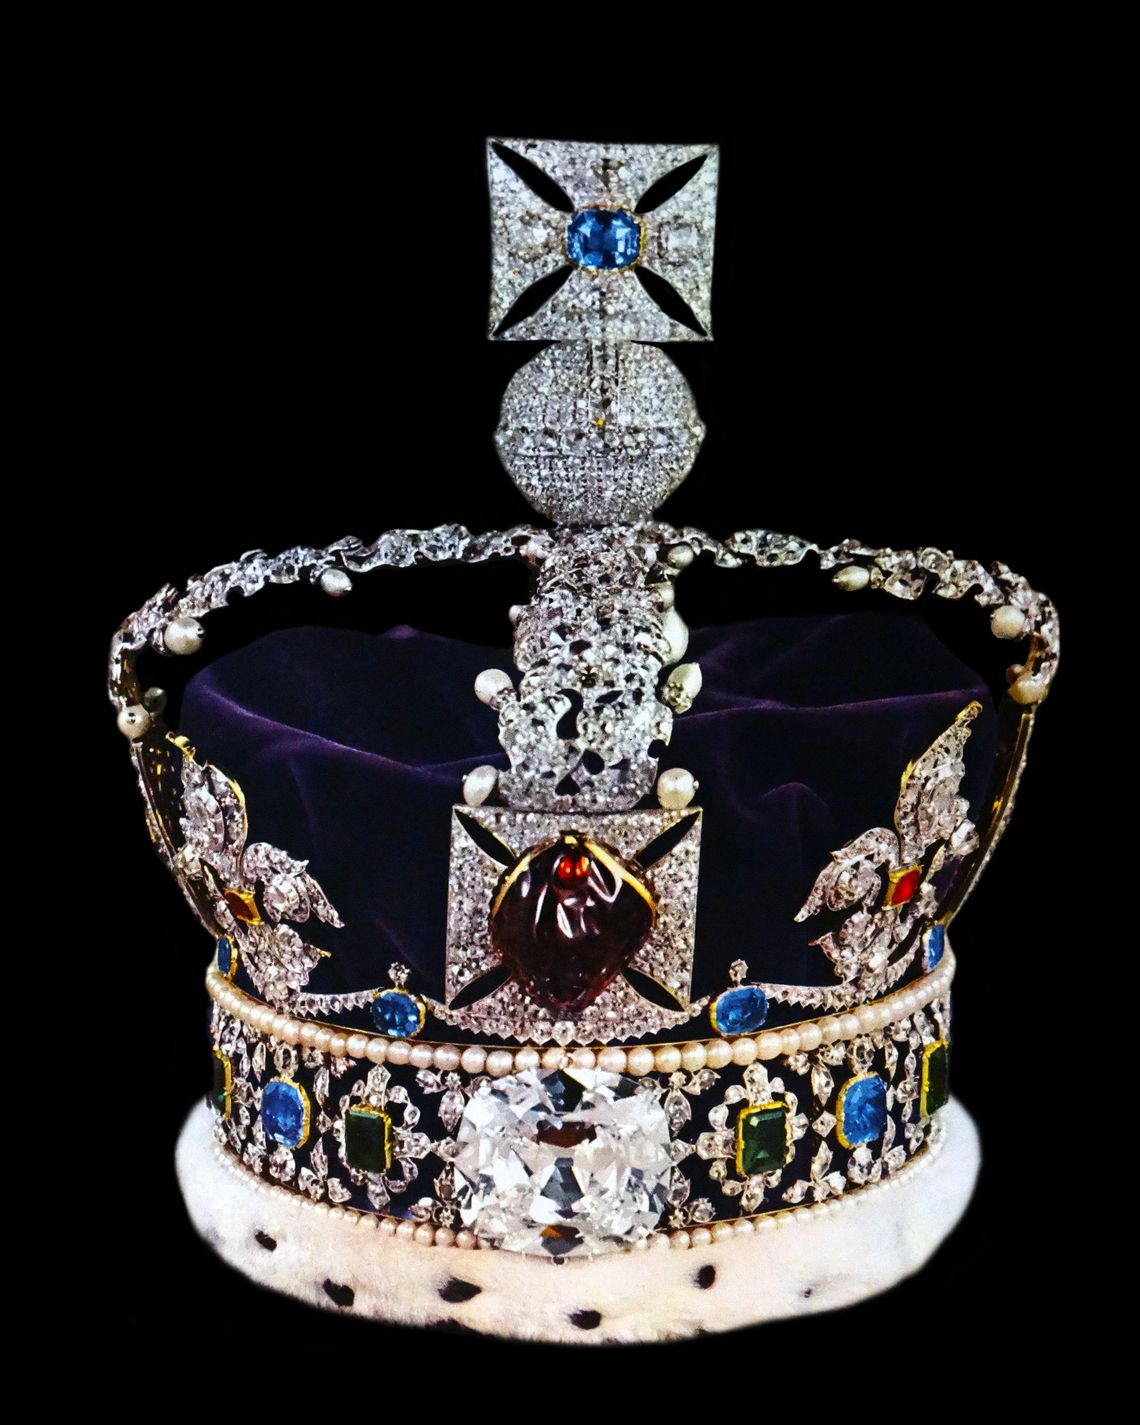 Kohinoor Diamond Back In The Spotlight Ahead Of King Charles's